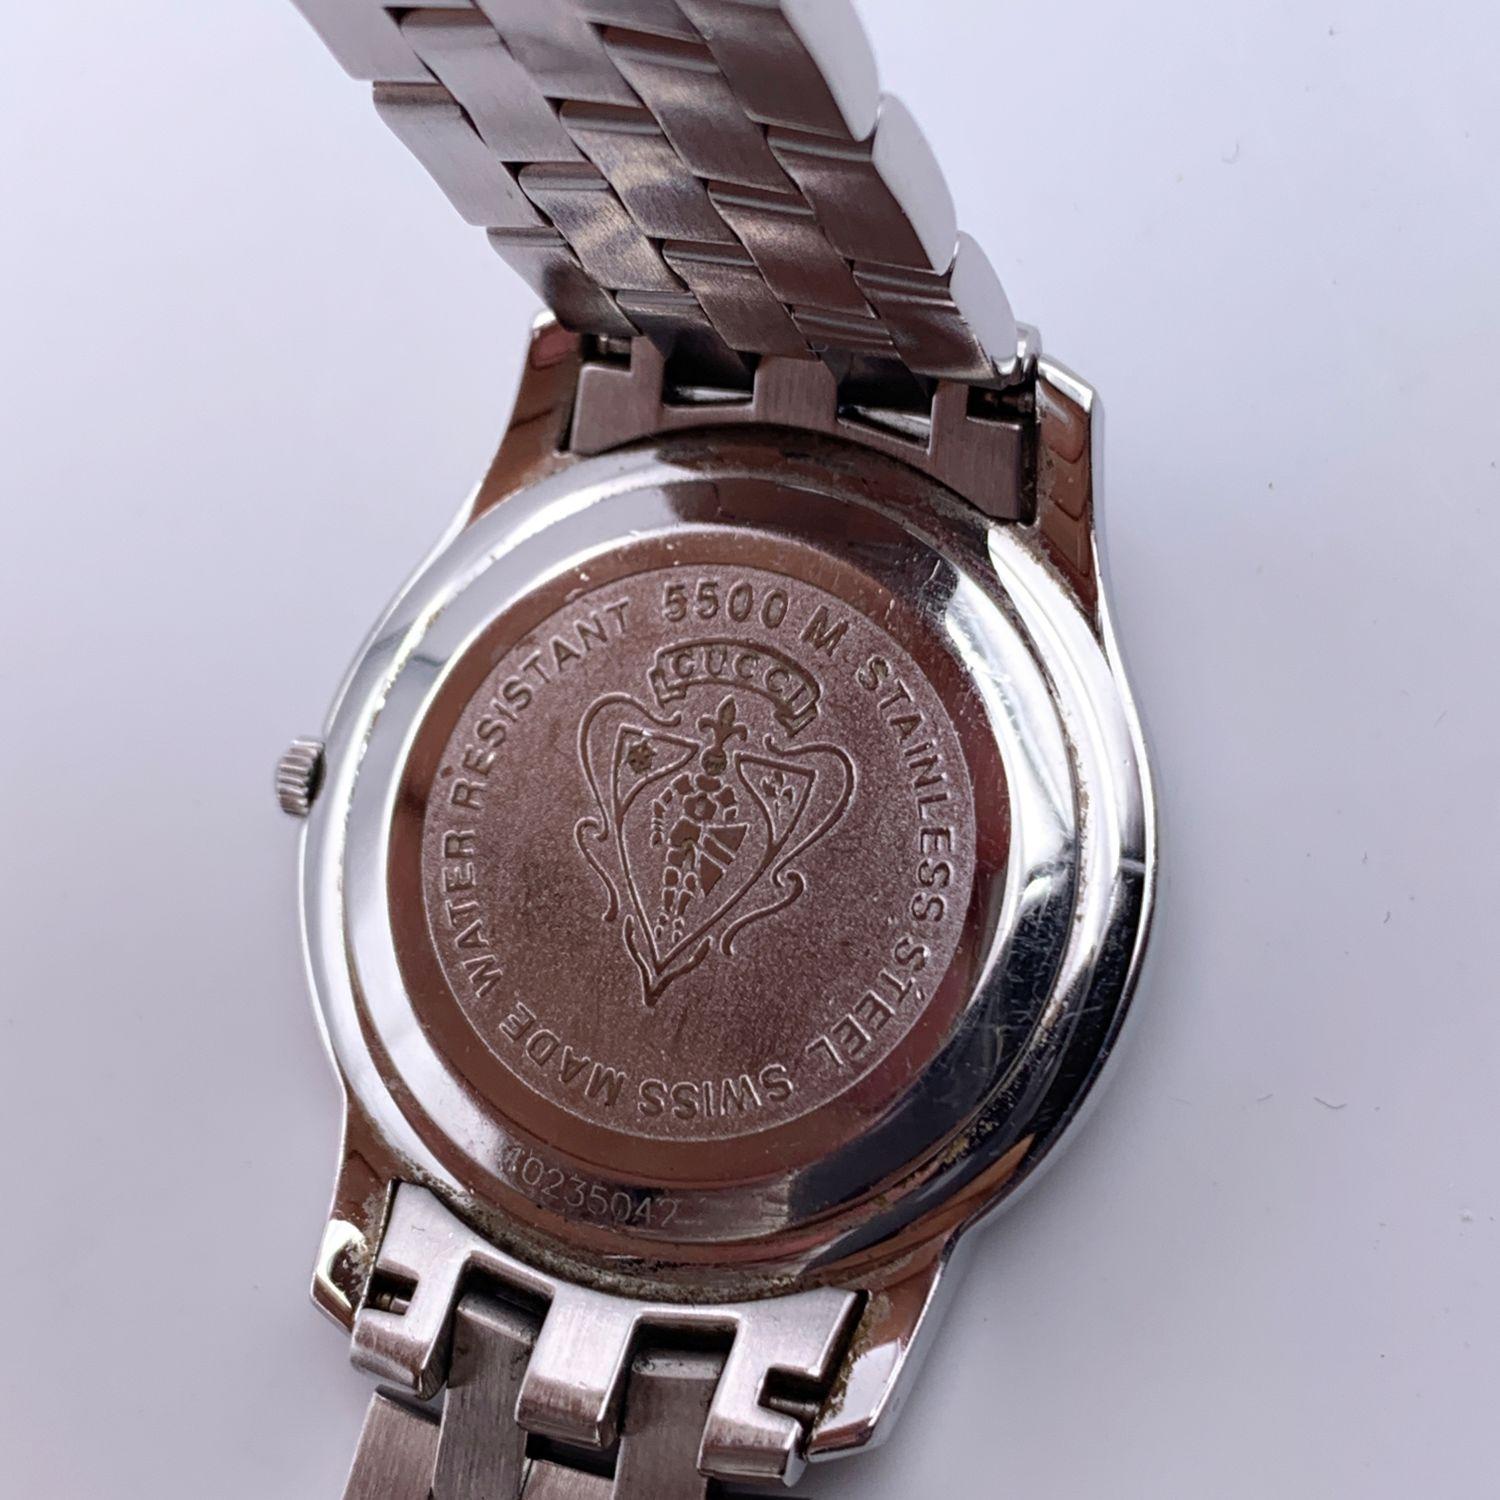 Gucci Silver Stainless Steel Mod 5500 M Wrist Watch Quartz Black Dial 4